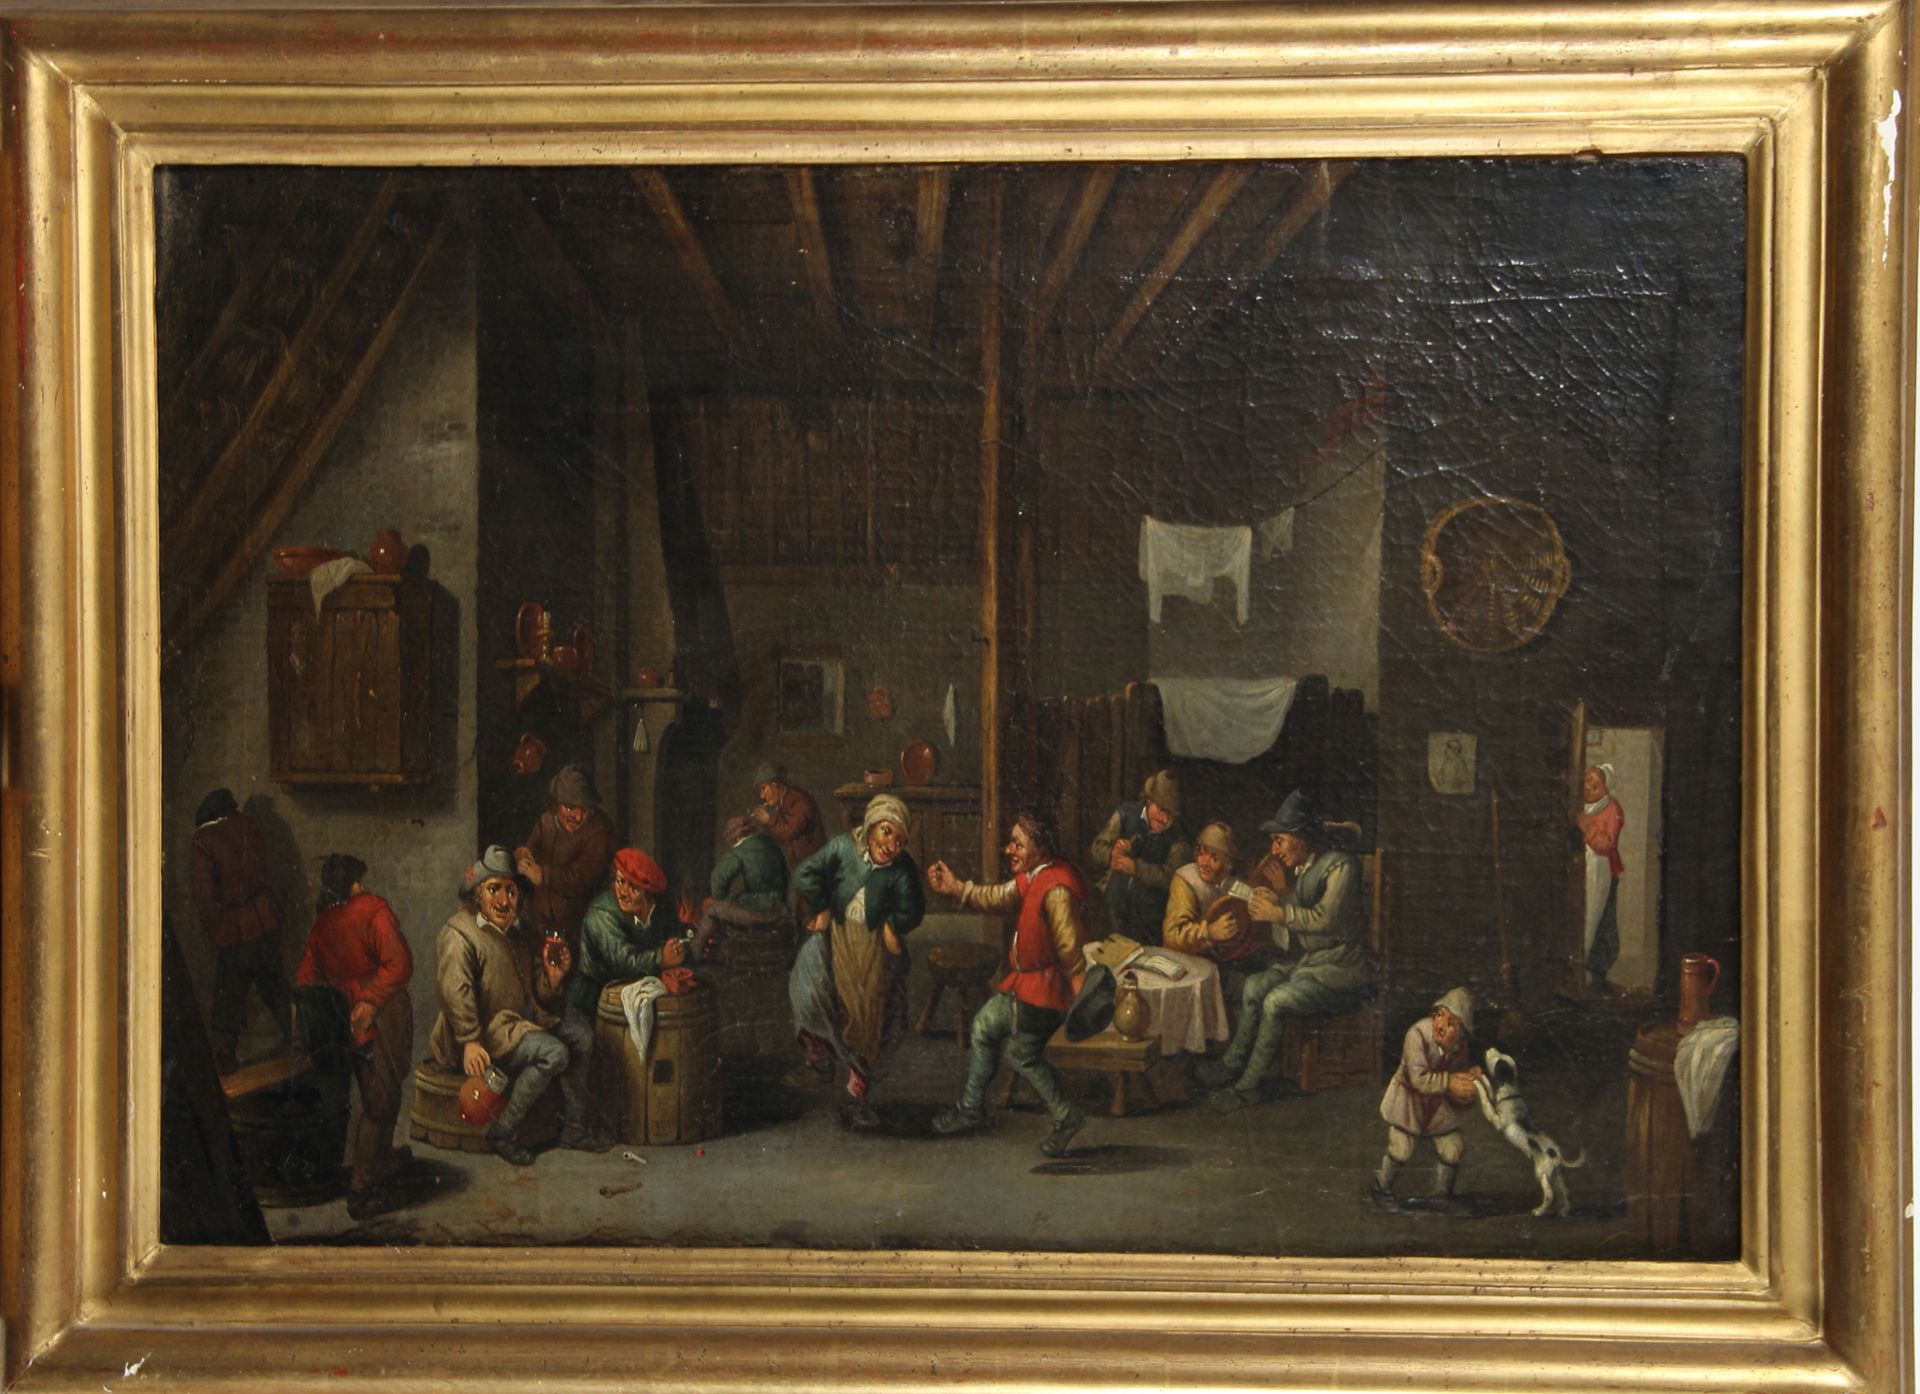 Null 范-埃尔蒙（1623-1679 年），归功于。

"酒馆场景

一对布面油画，形成一个吊坠。

(重新染色和修复） 

H.56 x 81 厘米